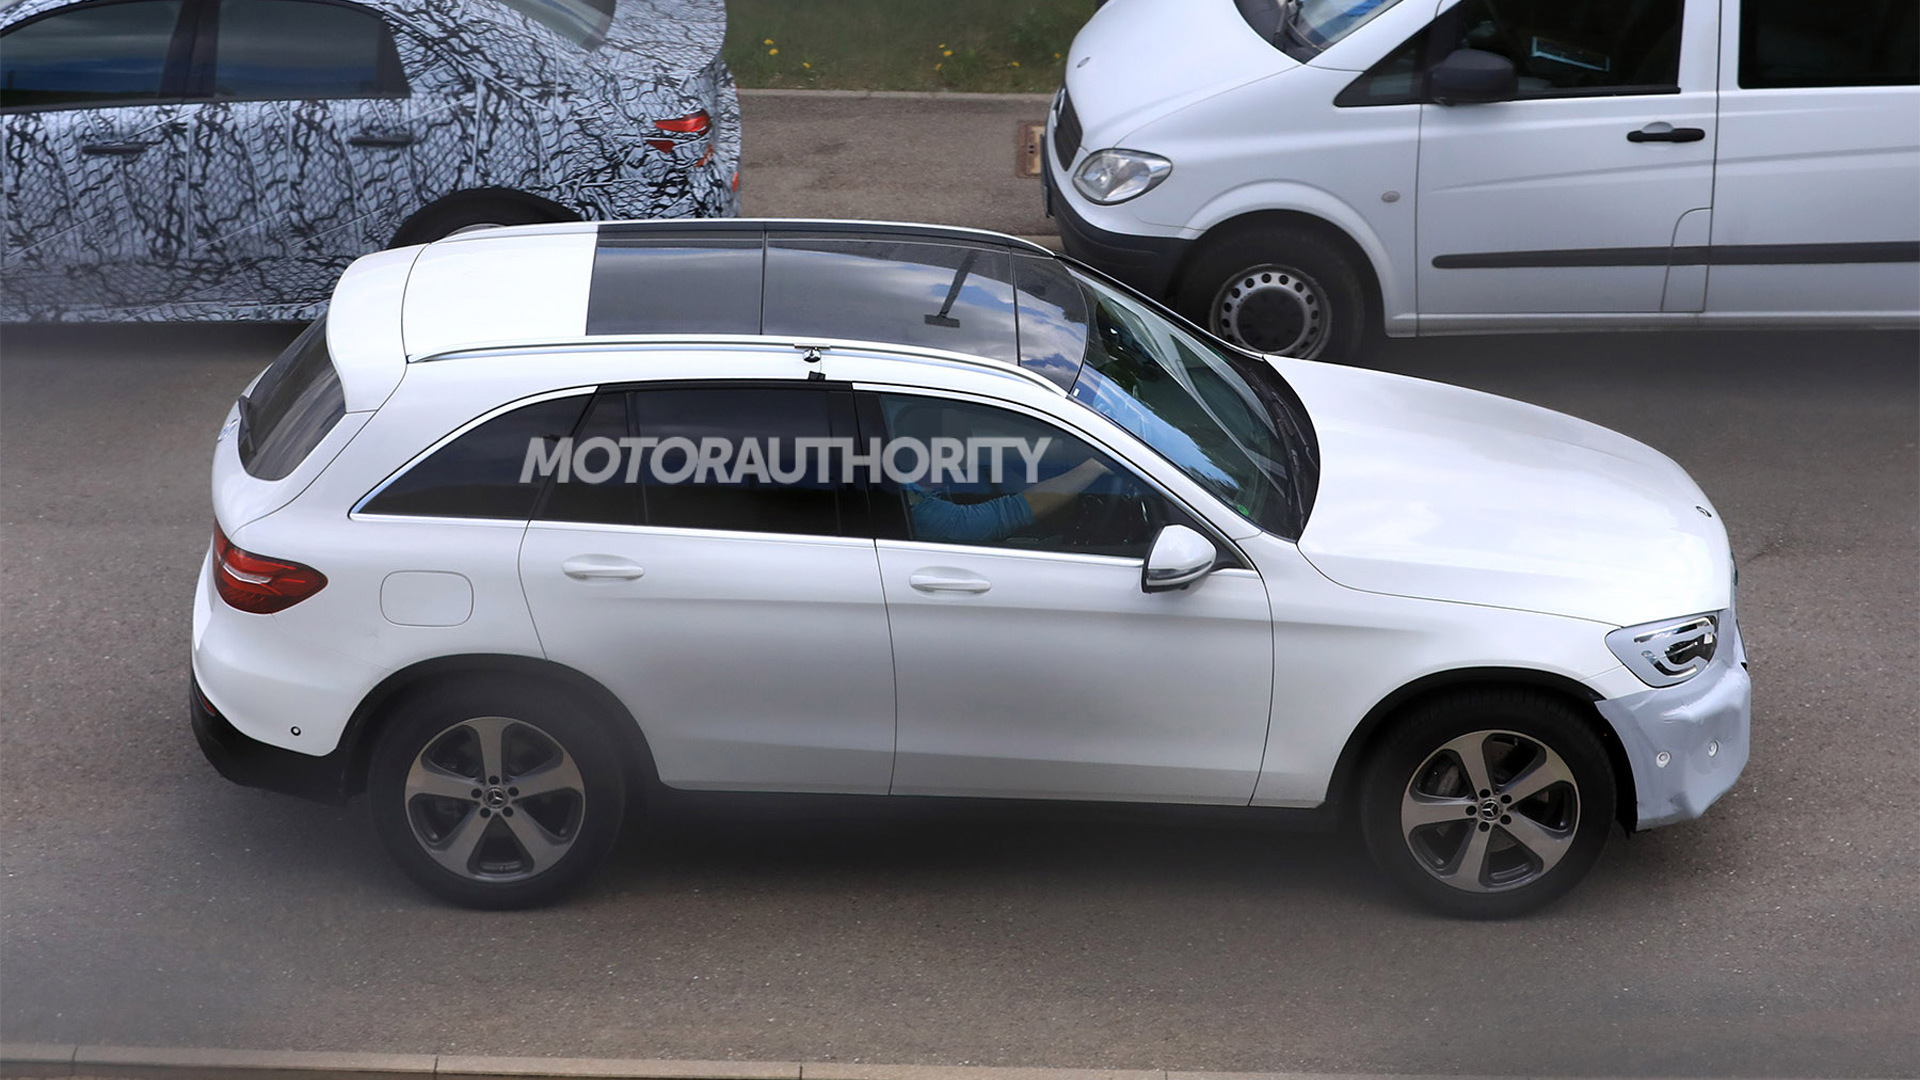 2020 Mercedes-Benz GLC facelift spy shots - Image via S. Baldauf/SB-Medien